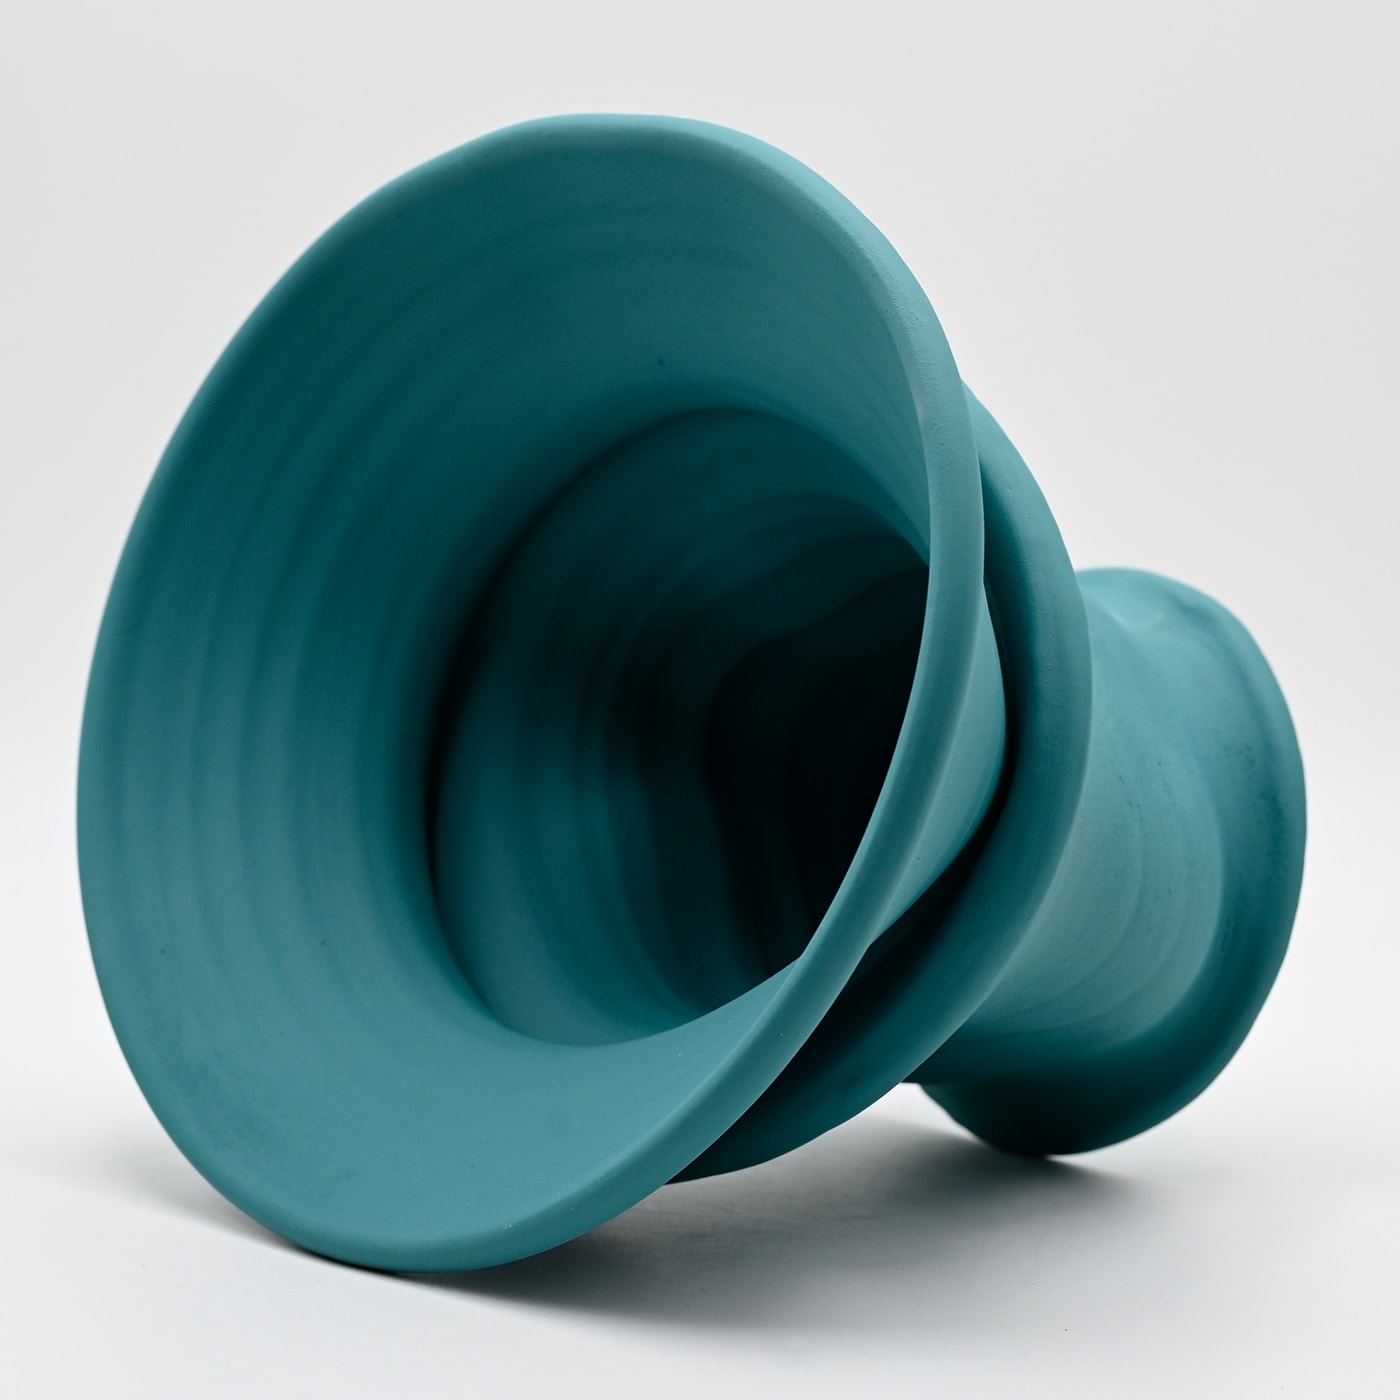 Turquoise Vase #2 - Ovo - Idee e Manufatti